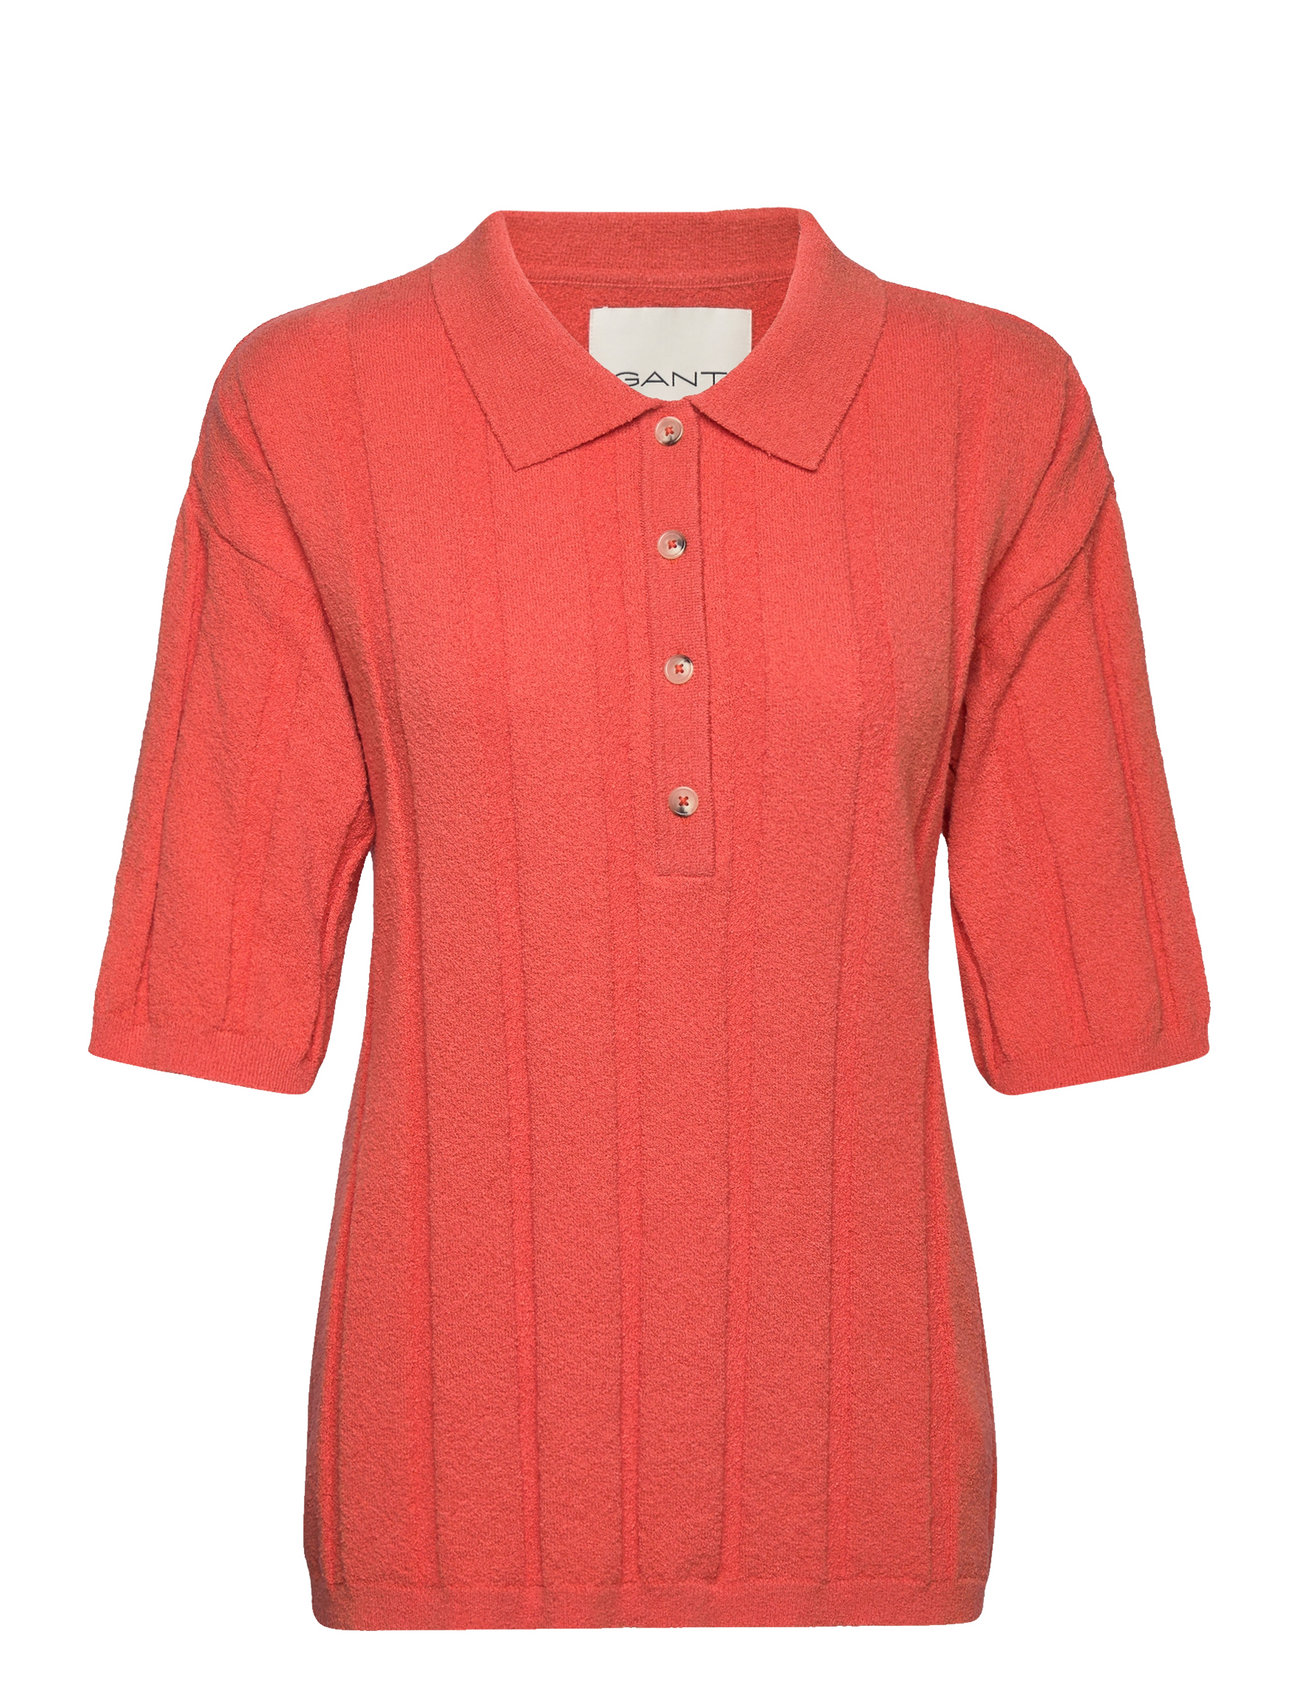 Terry Rib Polo Tops T-shirts & Tops Polos Orange GANT